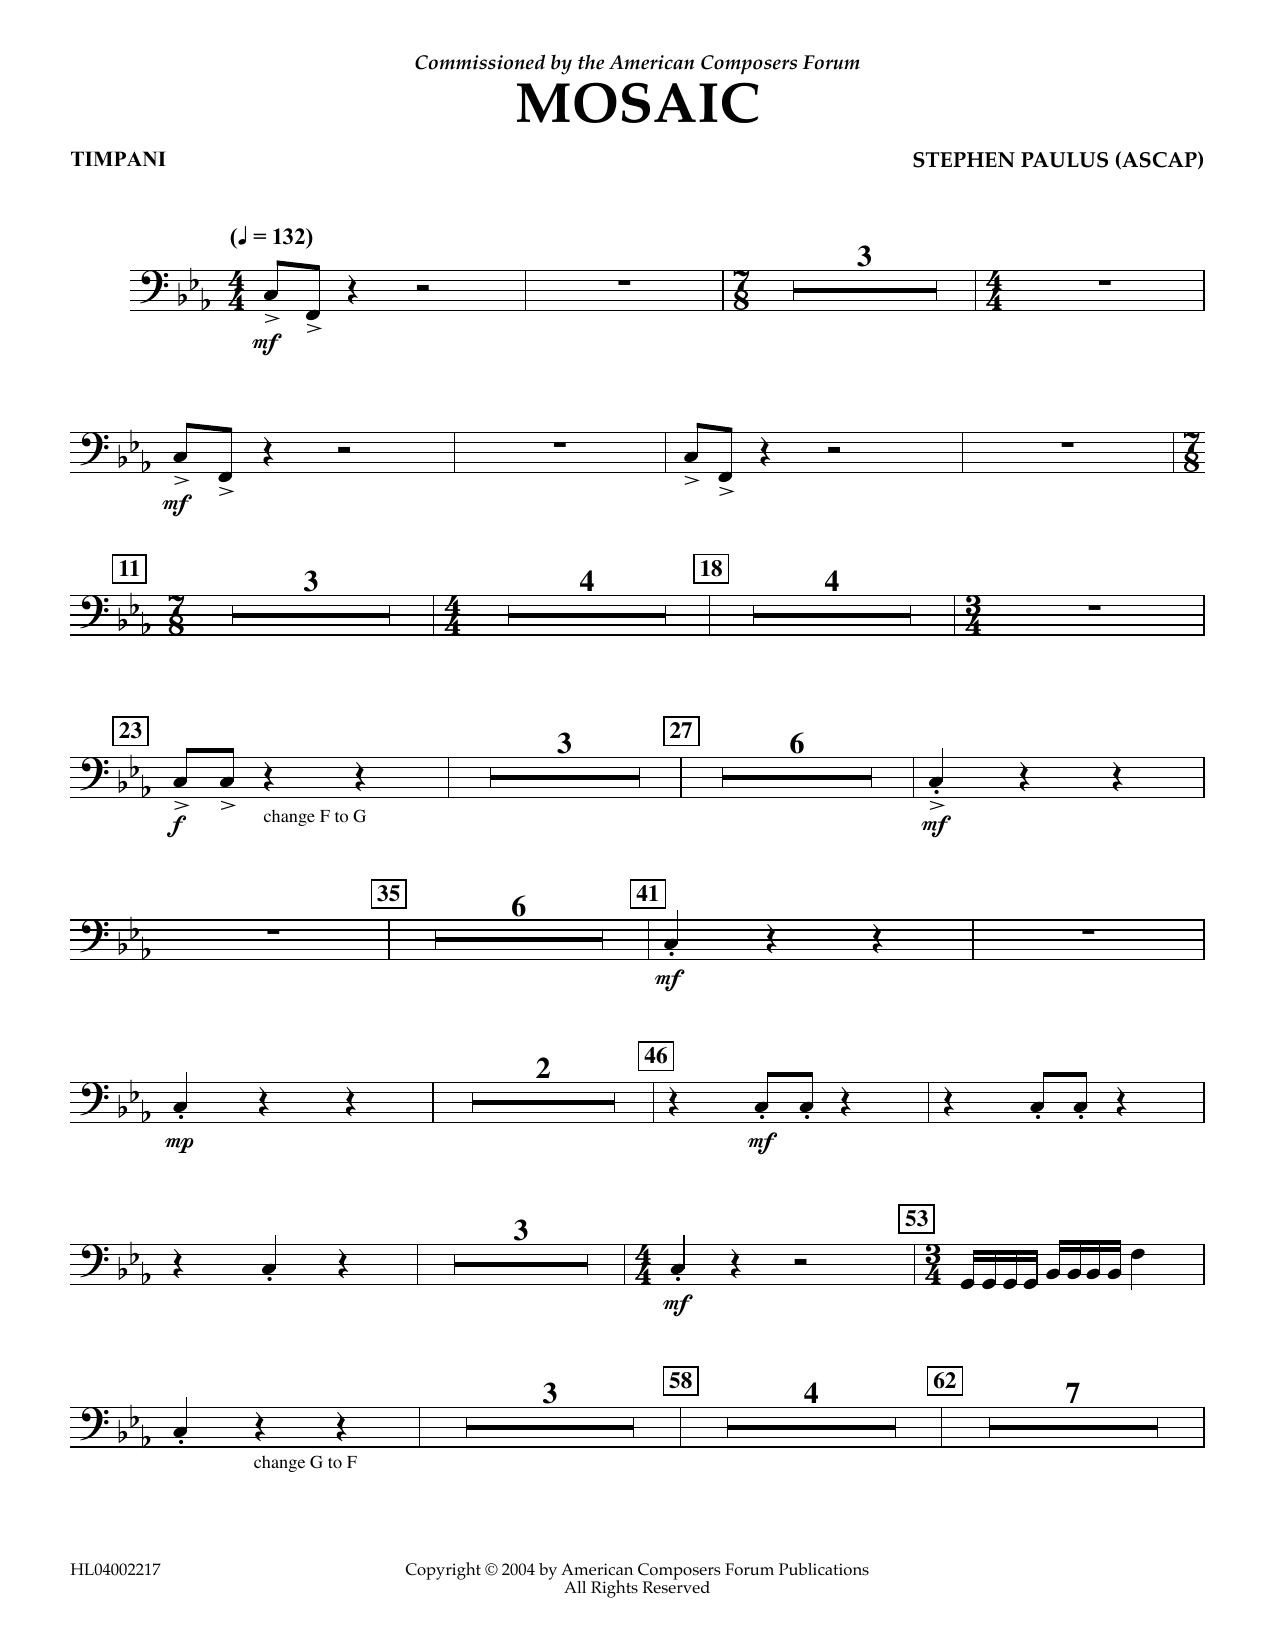 Stephen Paulus Mosaic - Timpani Sheet Music Notes & Chords for Concert Band - Download or Print PDF